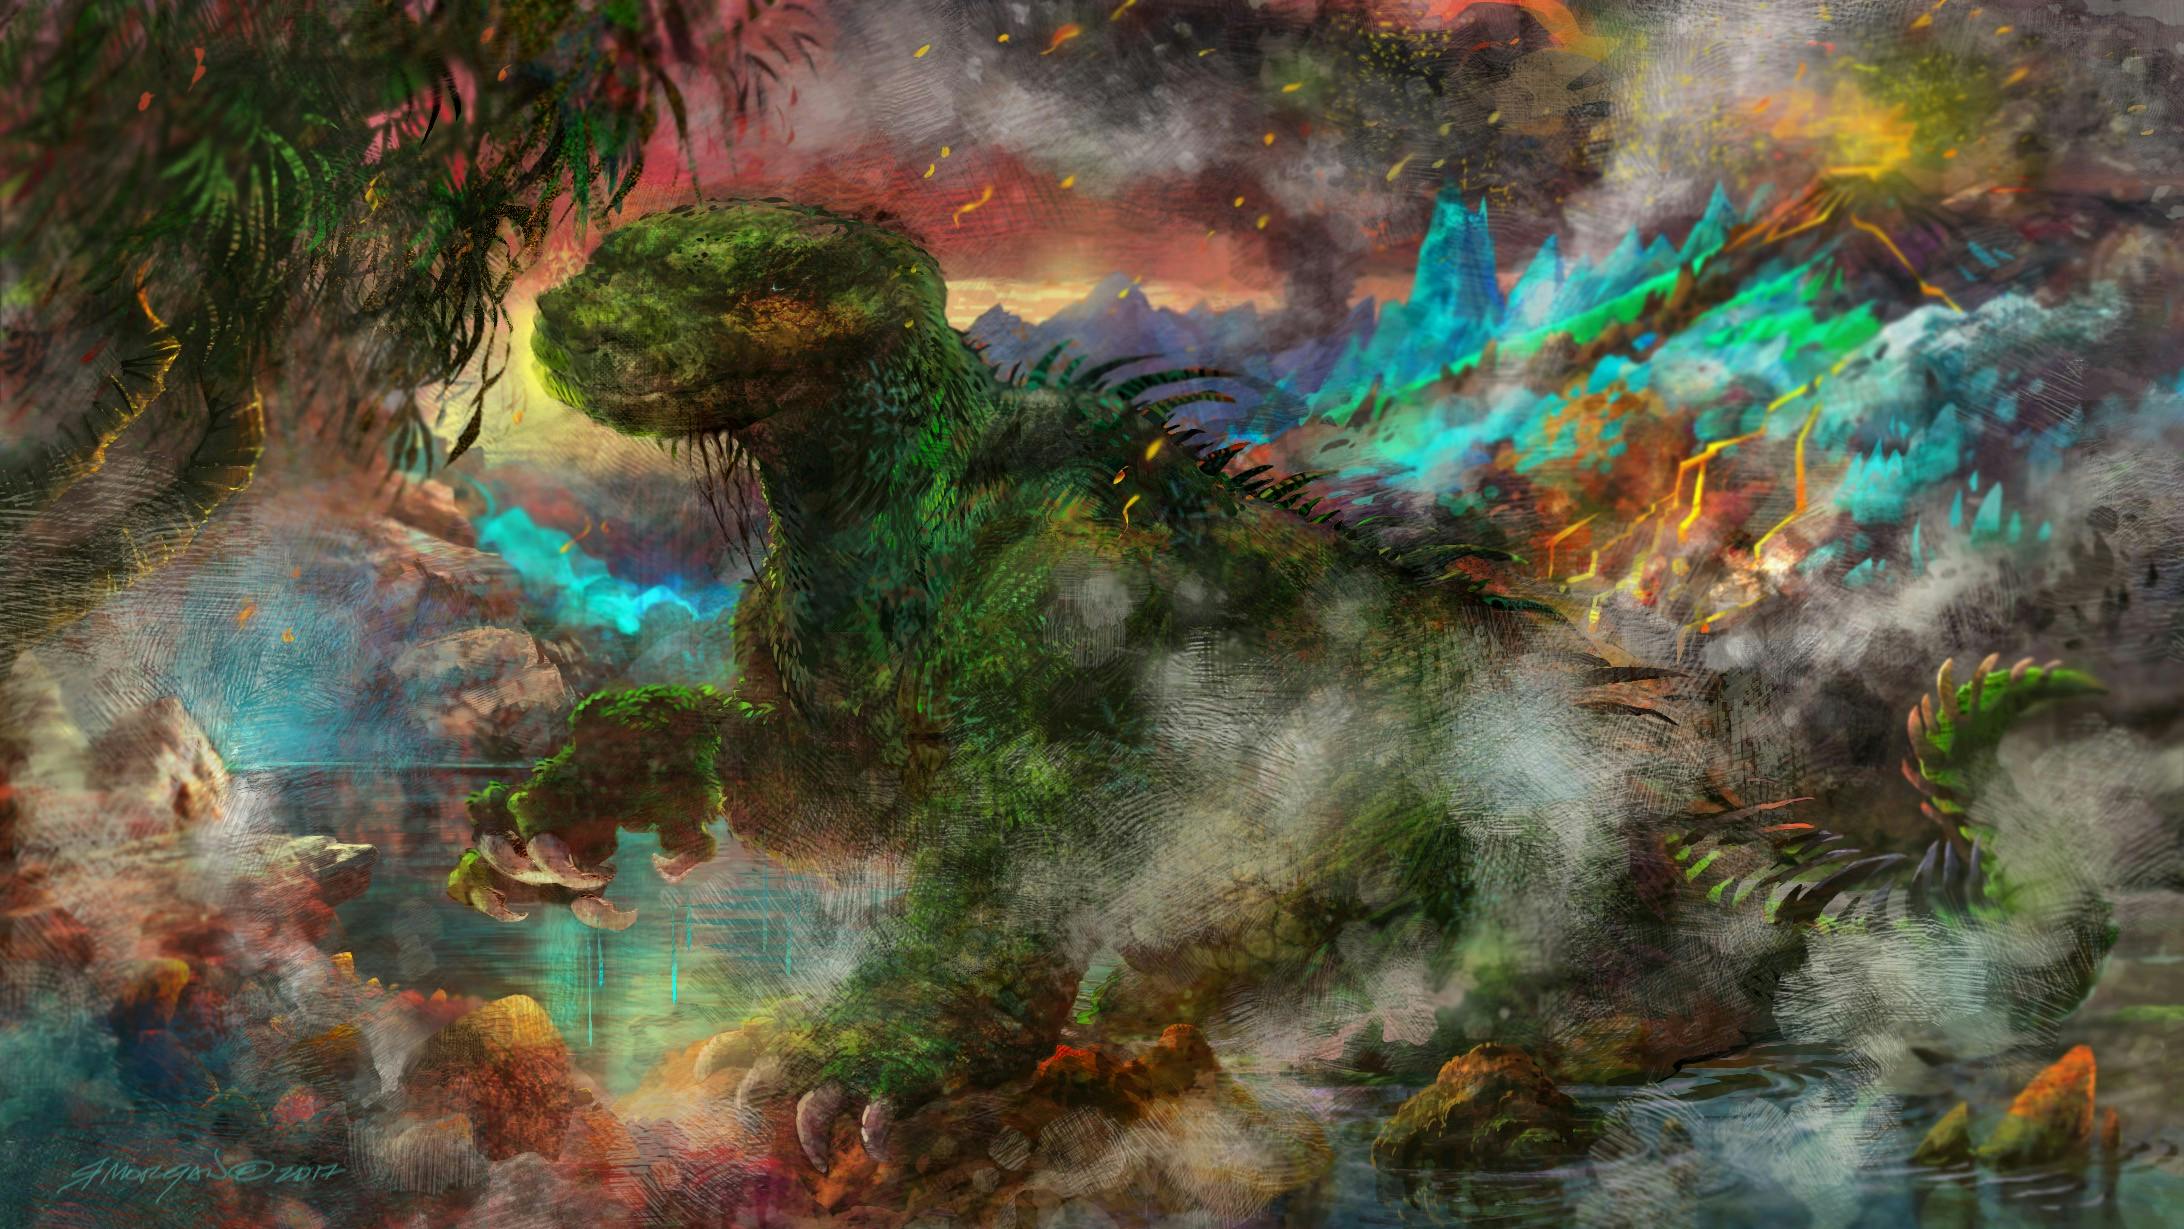 Godzilla walking in water